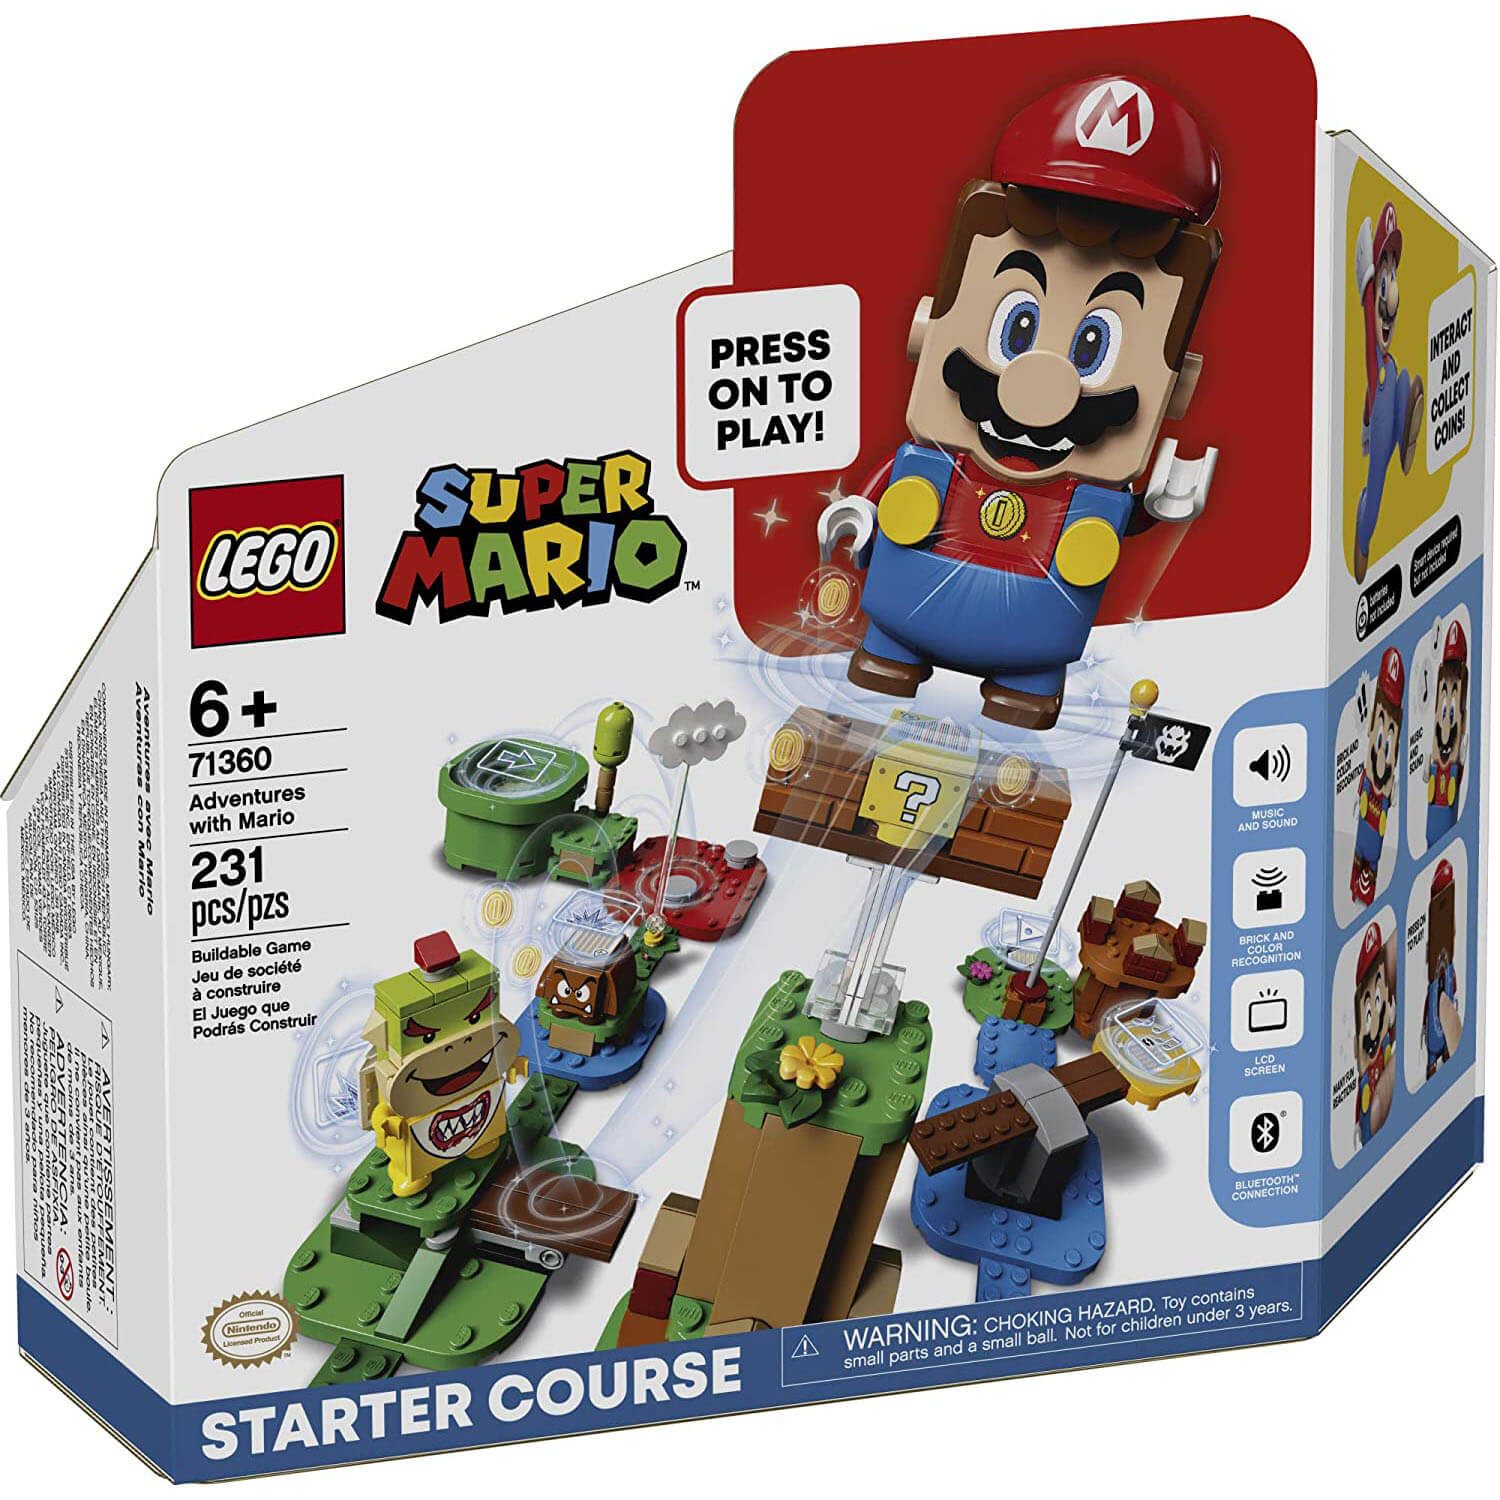 LEGO Super Mario Adventures with Mario Starter Course 231 Piece Building Set (71360) Package